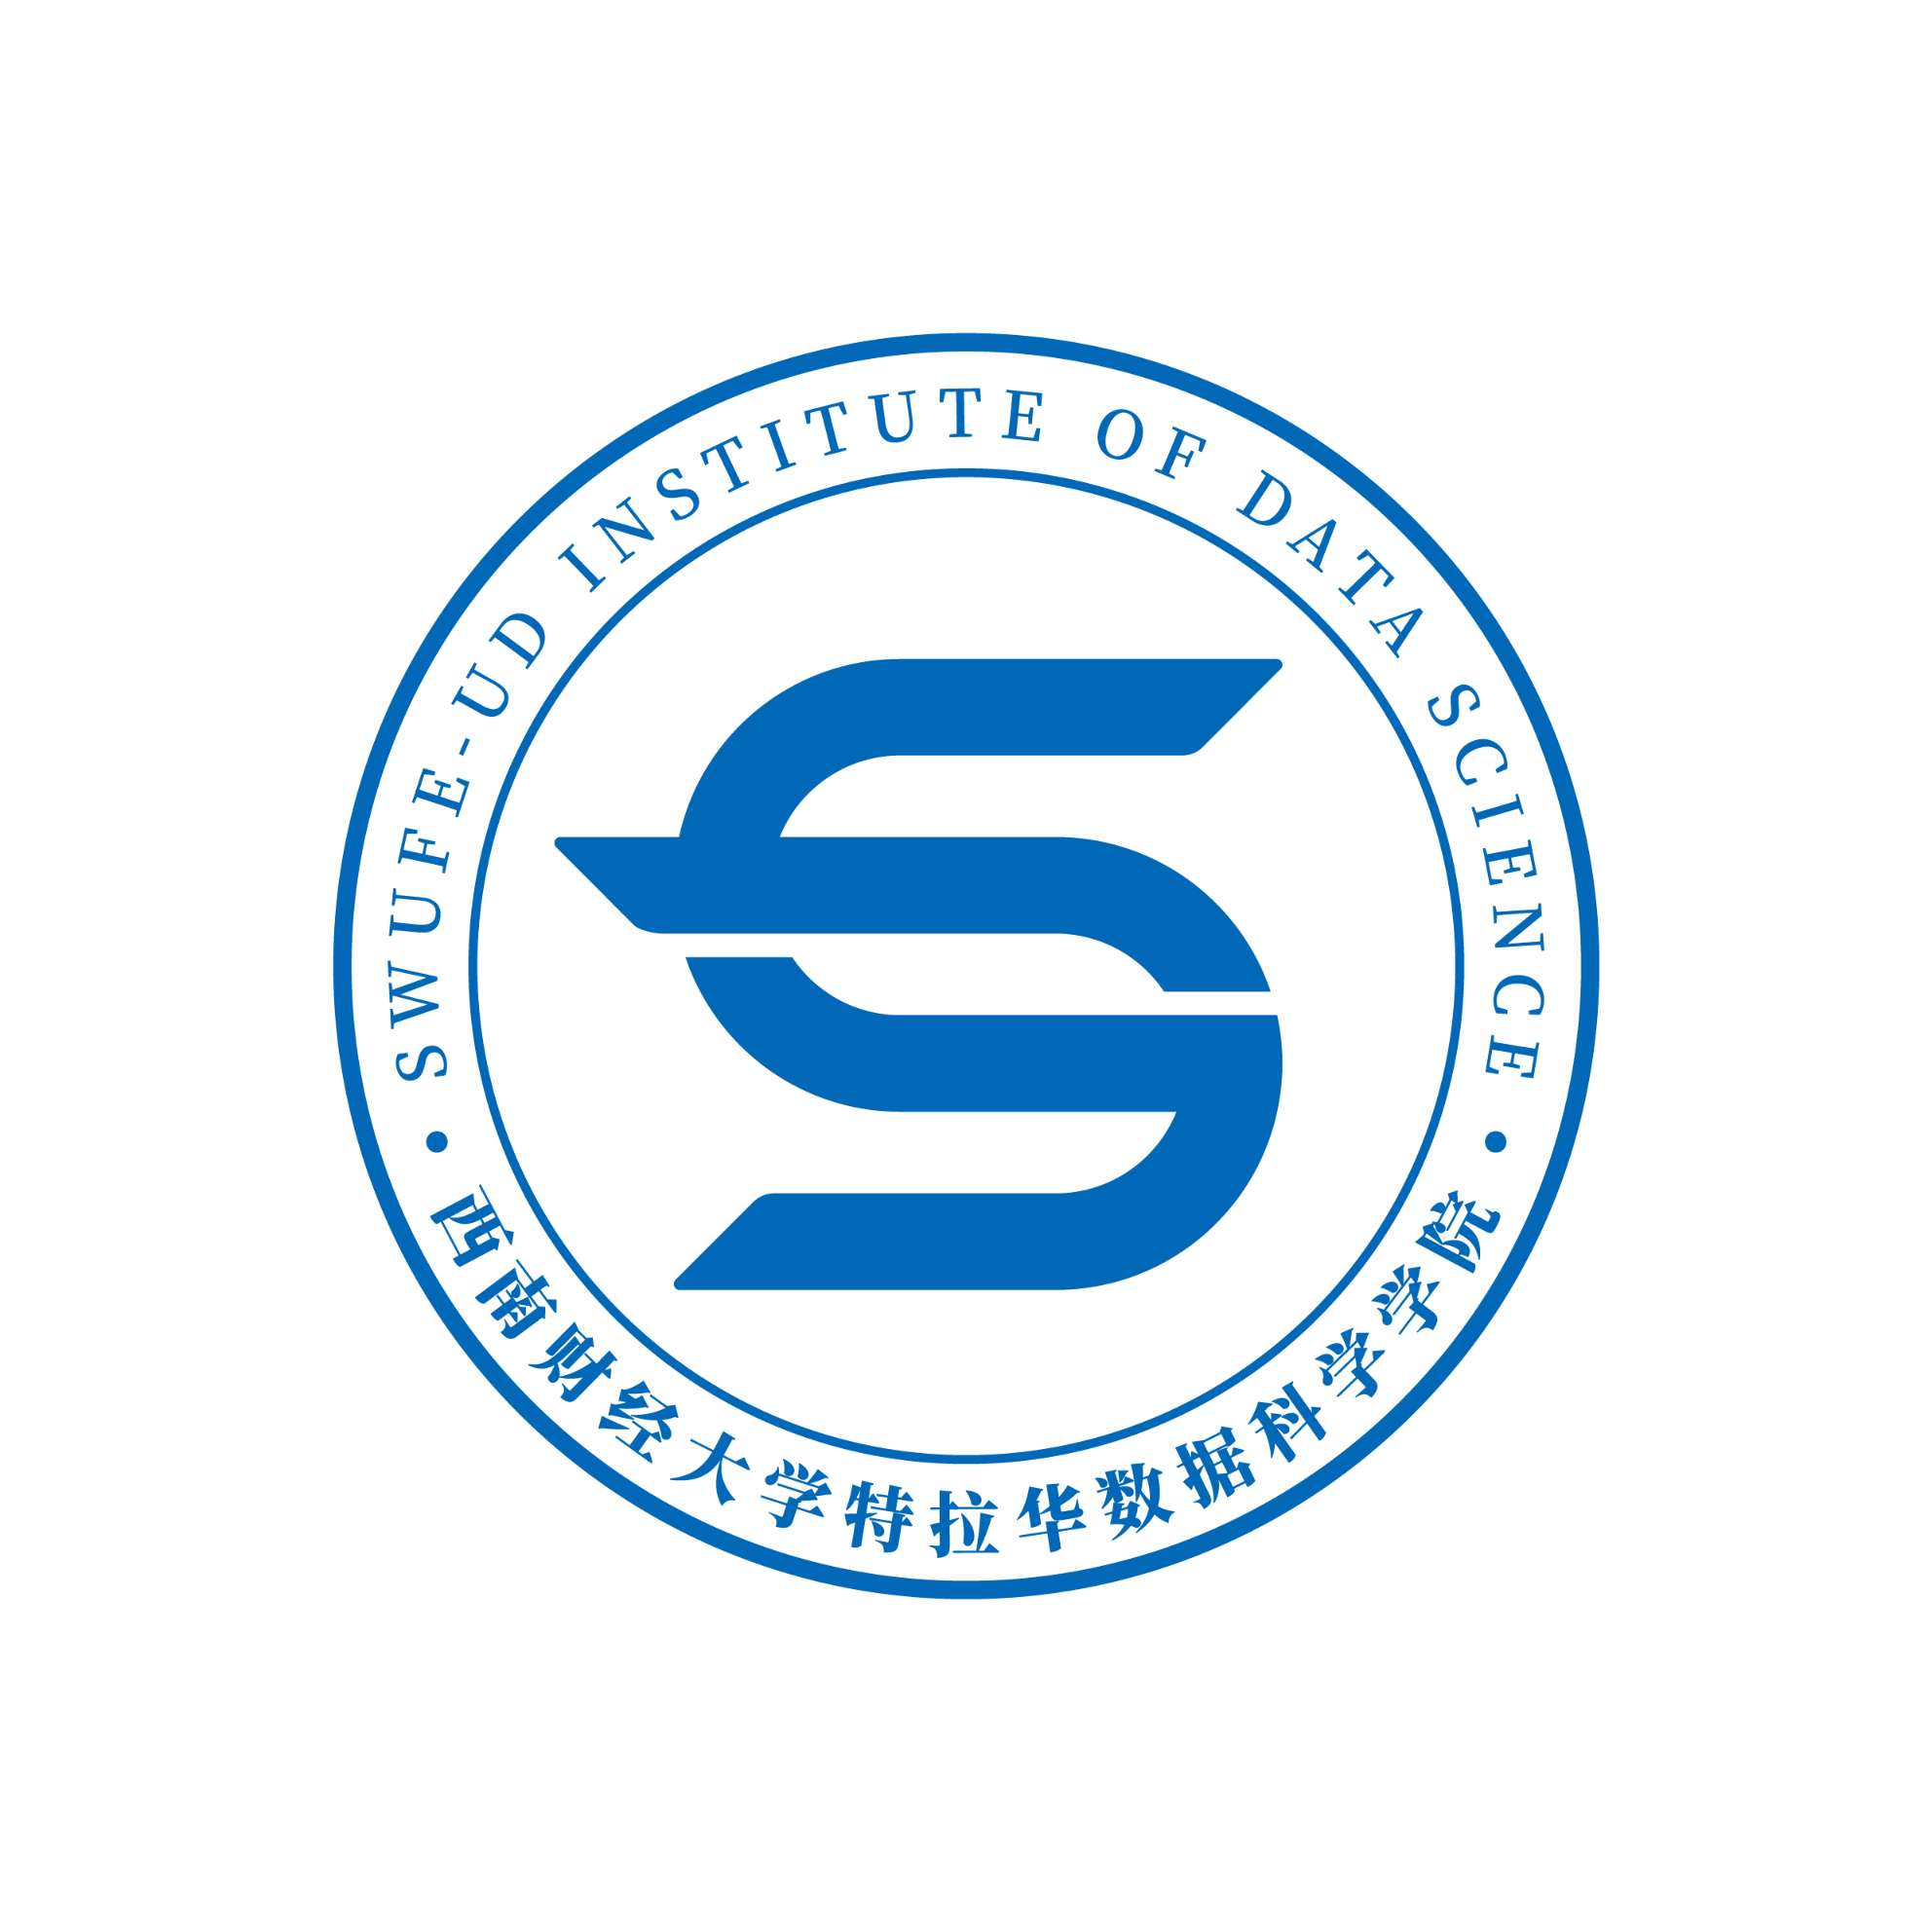 SWUFE-UD Institute of Data Science at Southwestern University of Finance and Economics logo